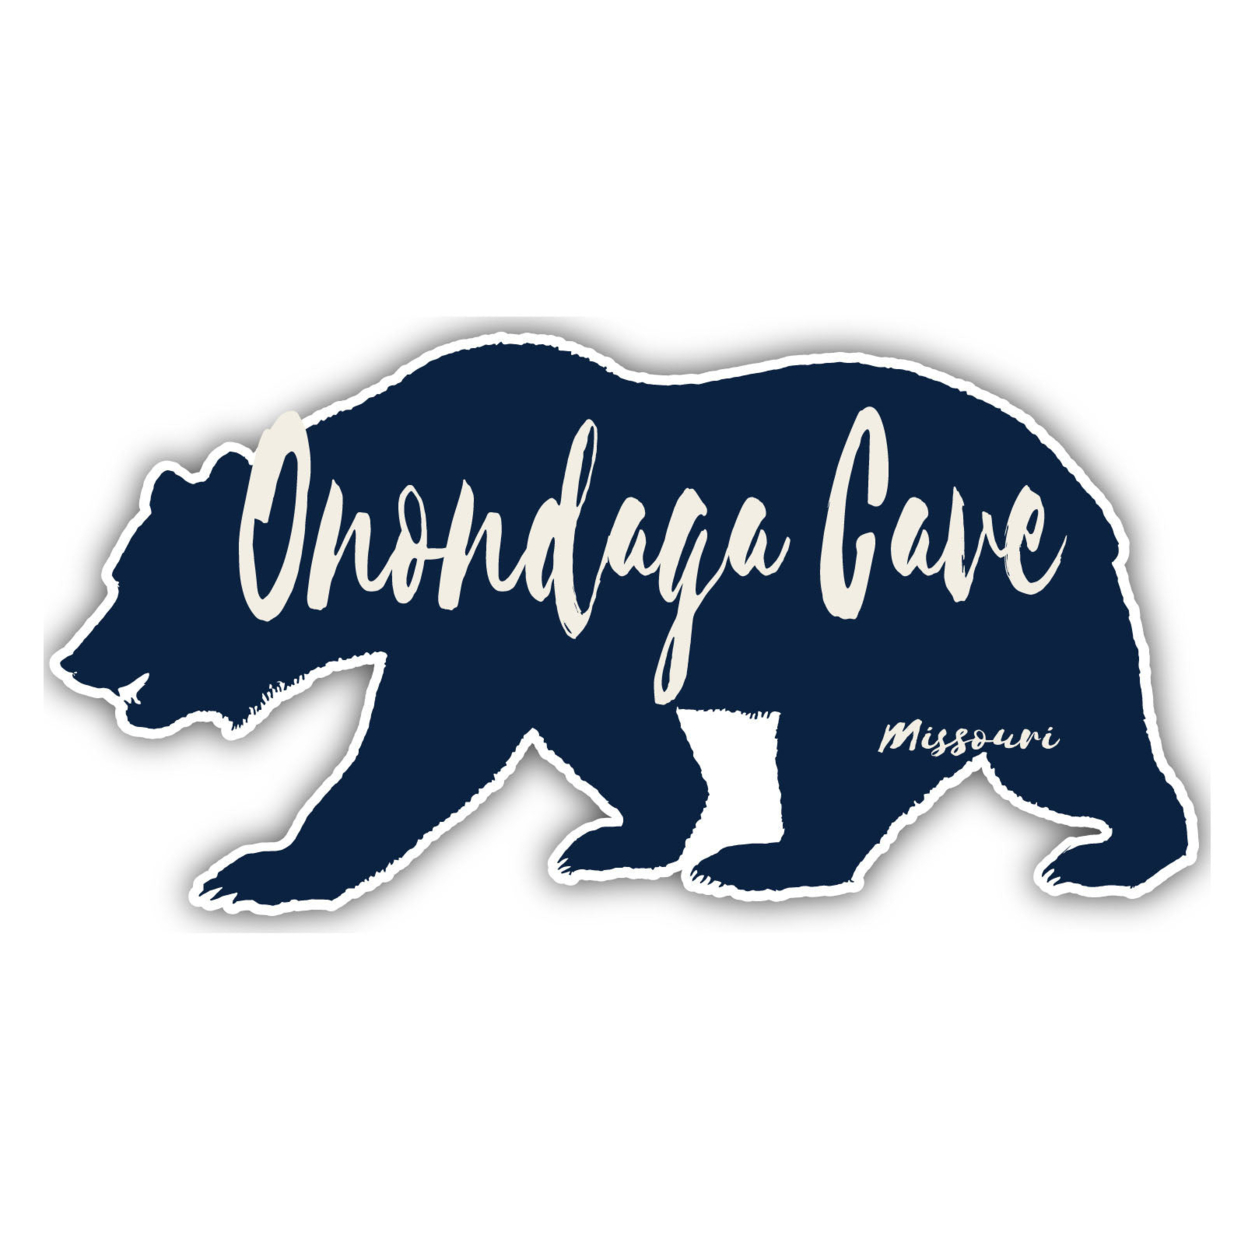 Onondaga Cave Missouri Souvenir Decorative Stickers (Choose Theme And Size) - Single Unit, 2-Inch, Bear